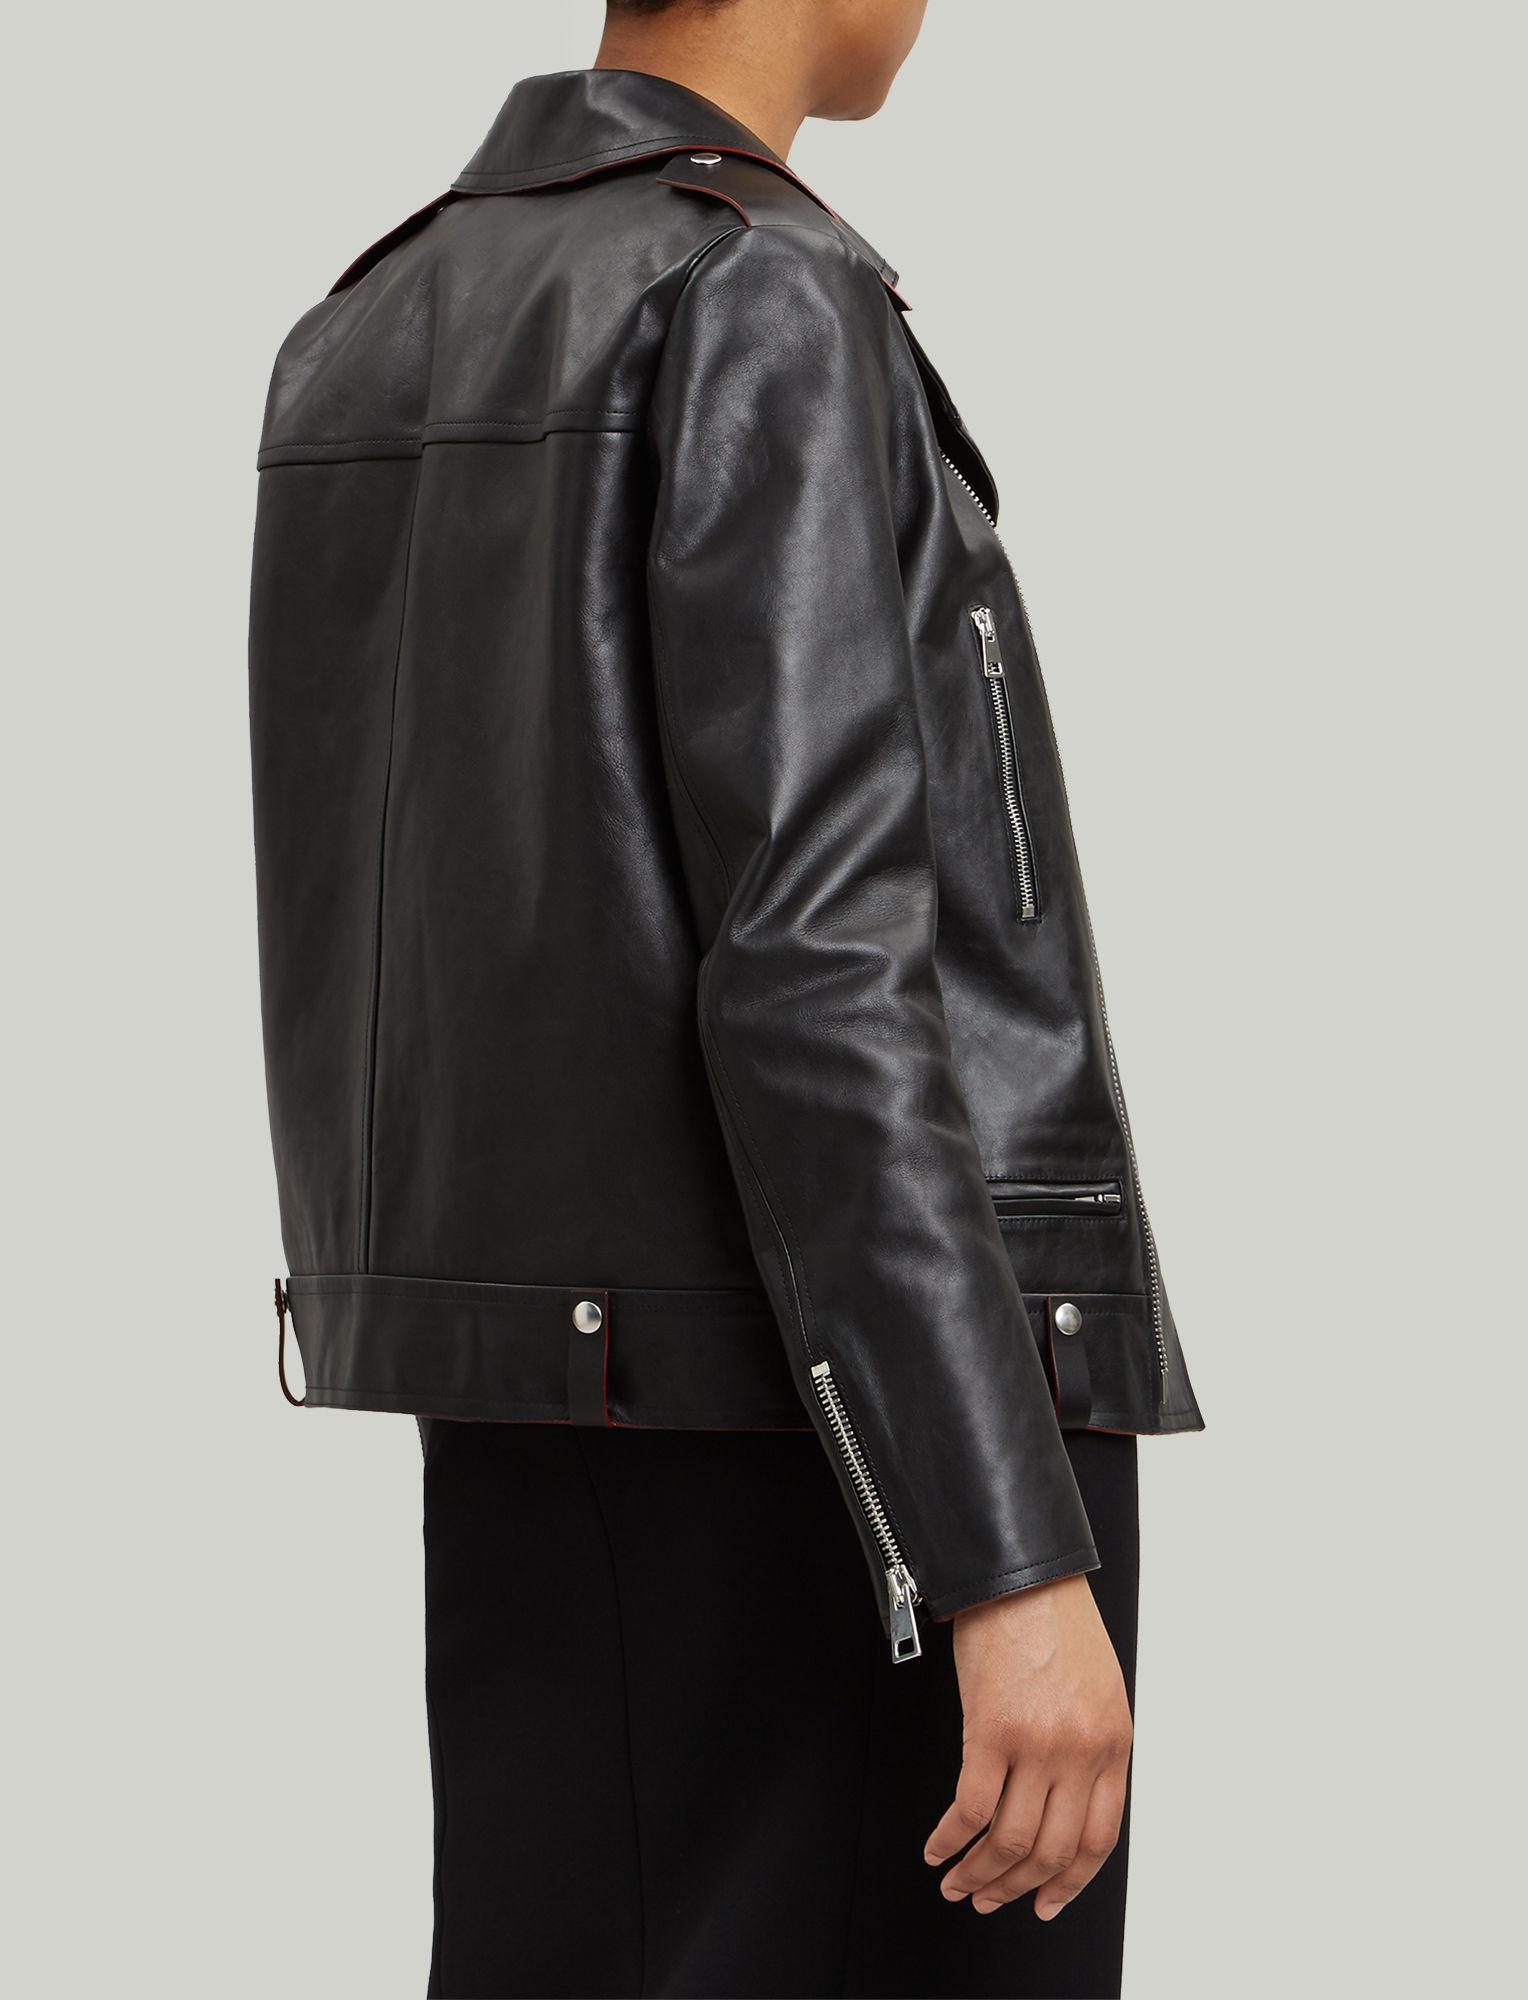 JOSEPH Ryder Biker Leather Jacket in Black - Lyst